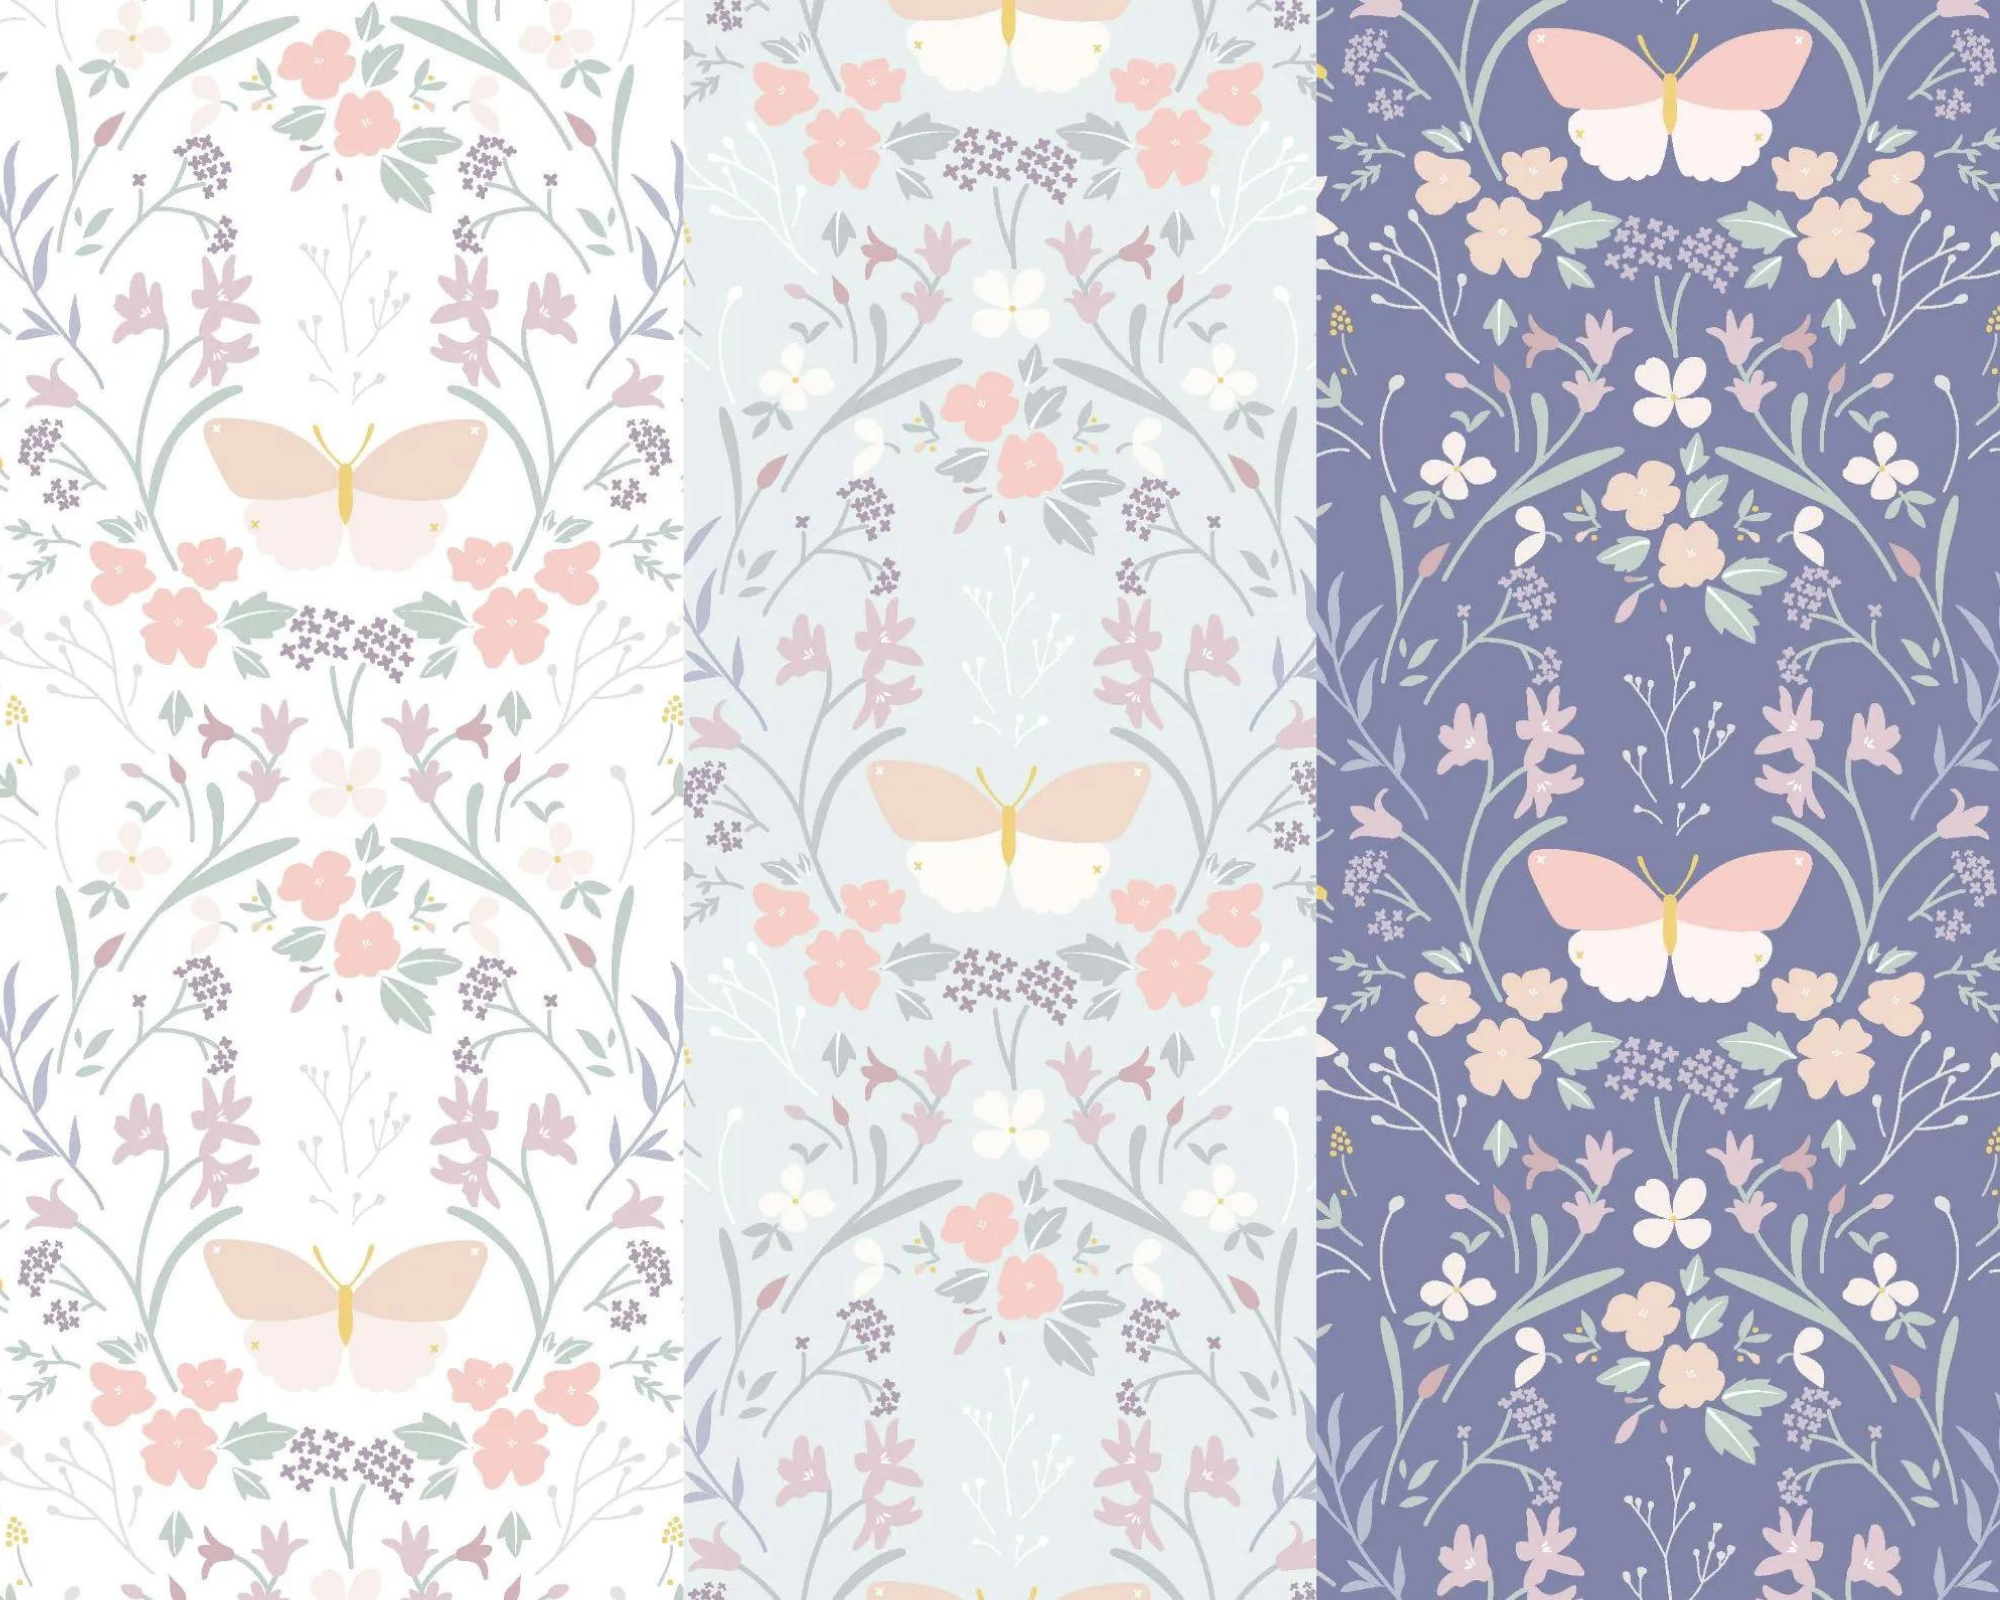 Petals Flowers on purple cotton fabric - Lewis & Irene